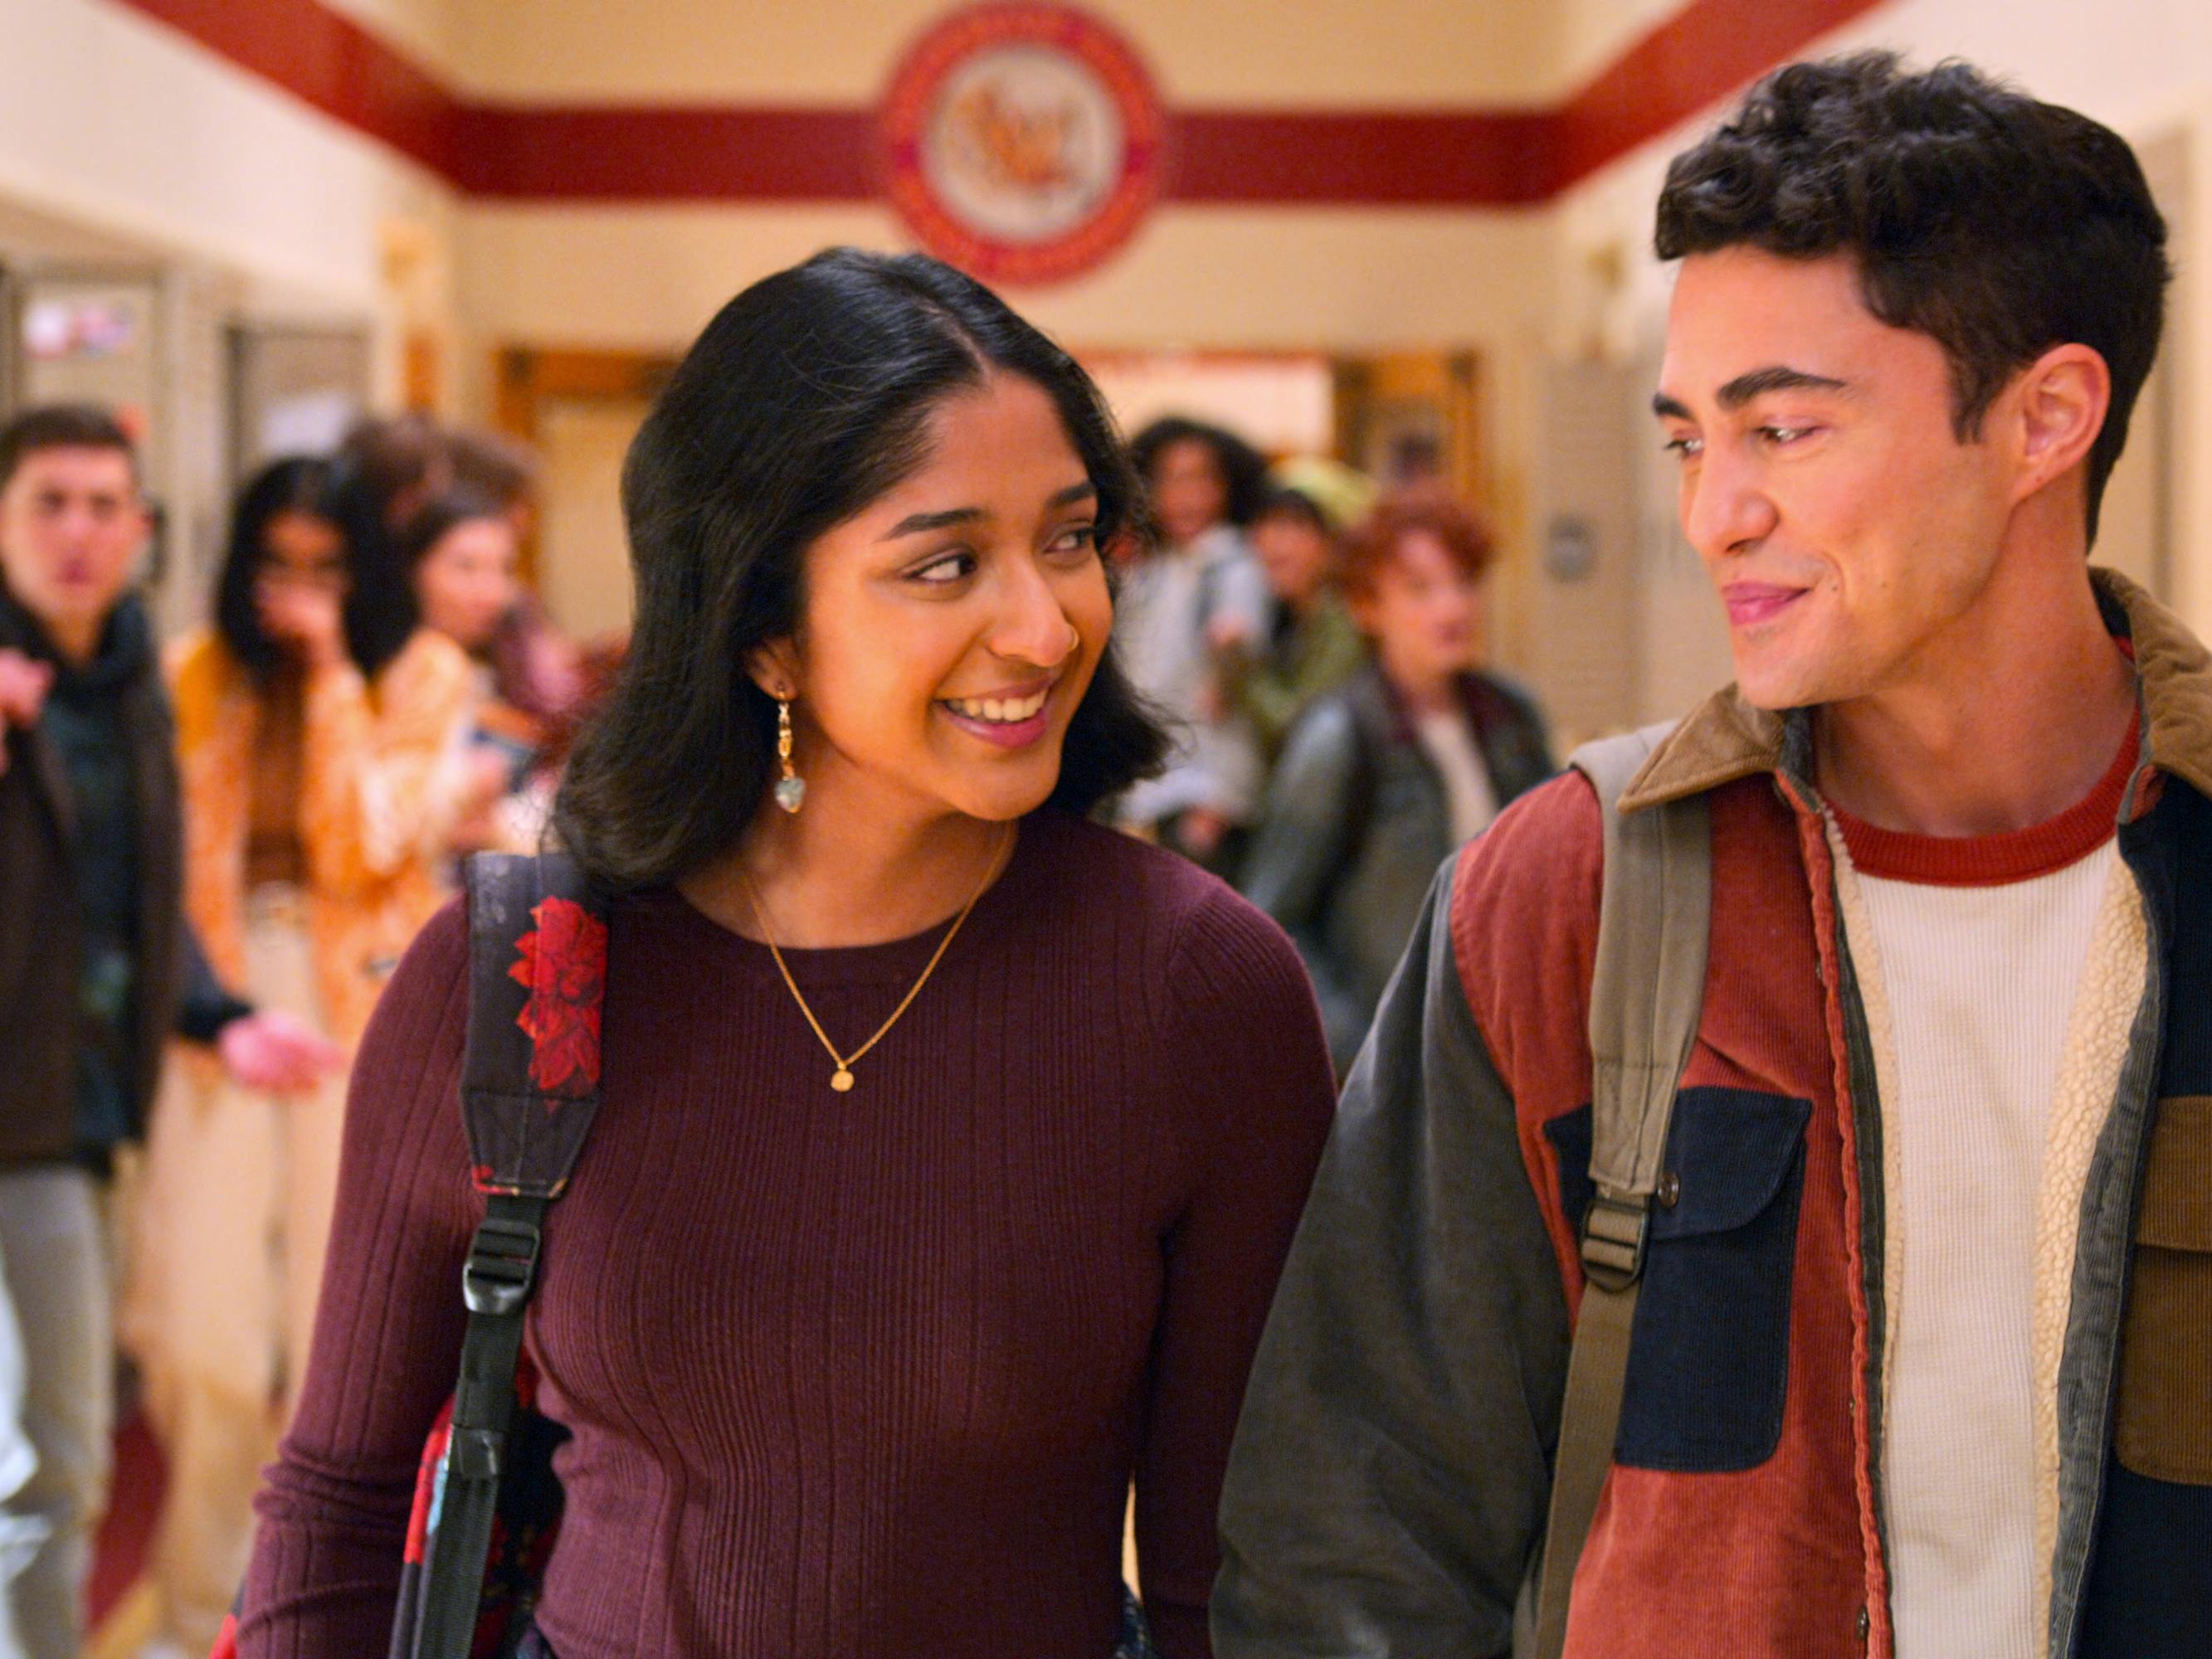 Devi Vishwakumar (Maitreyi Ramakrishnan) and Paxton Hall-Yoshida (Darren Barnet) walk through the school hallways as other students look on shocked.